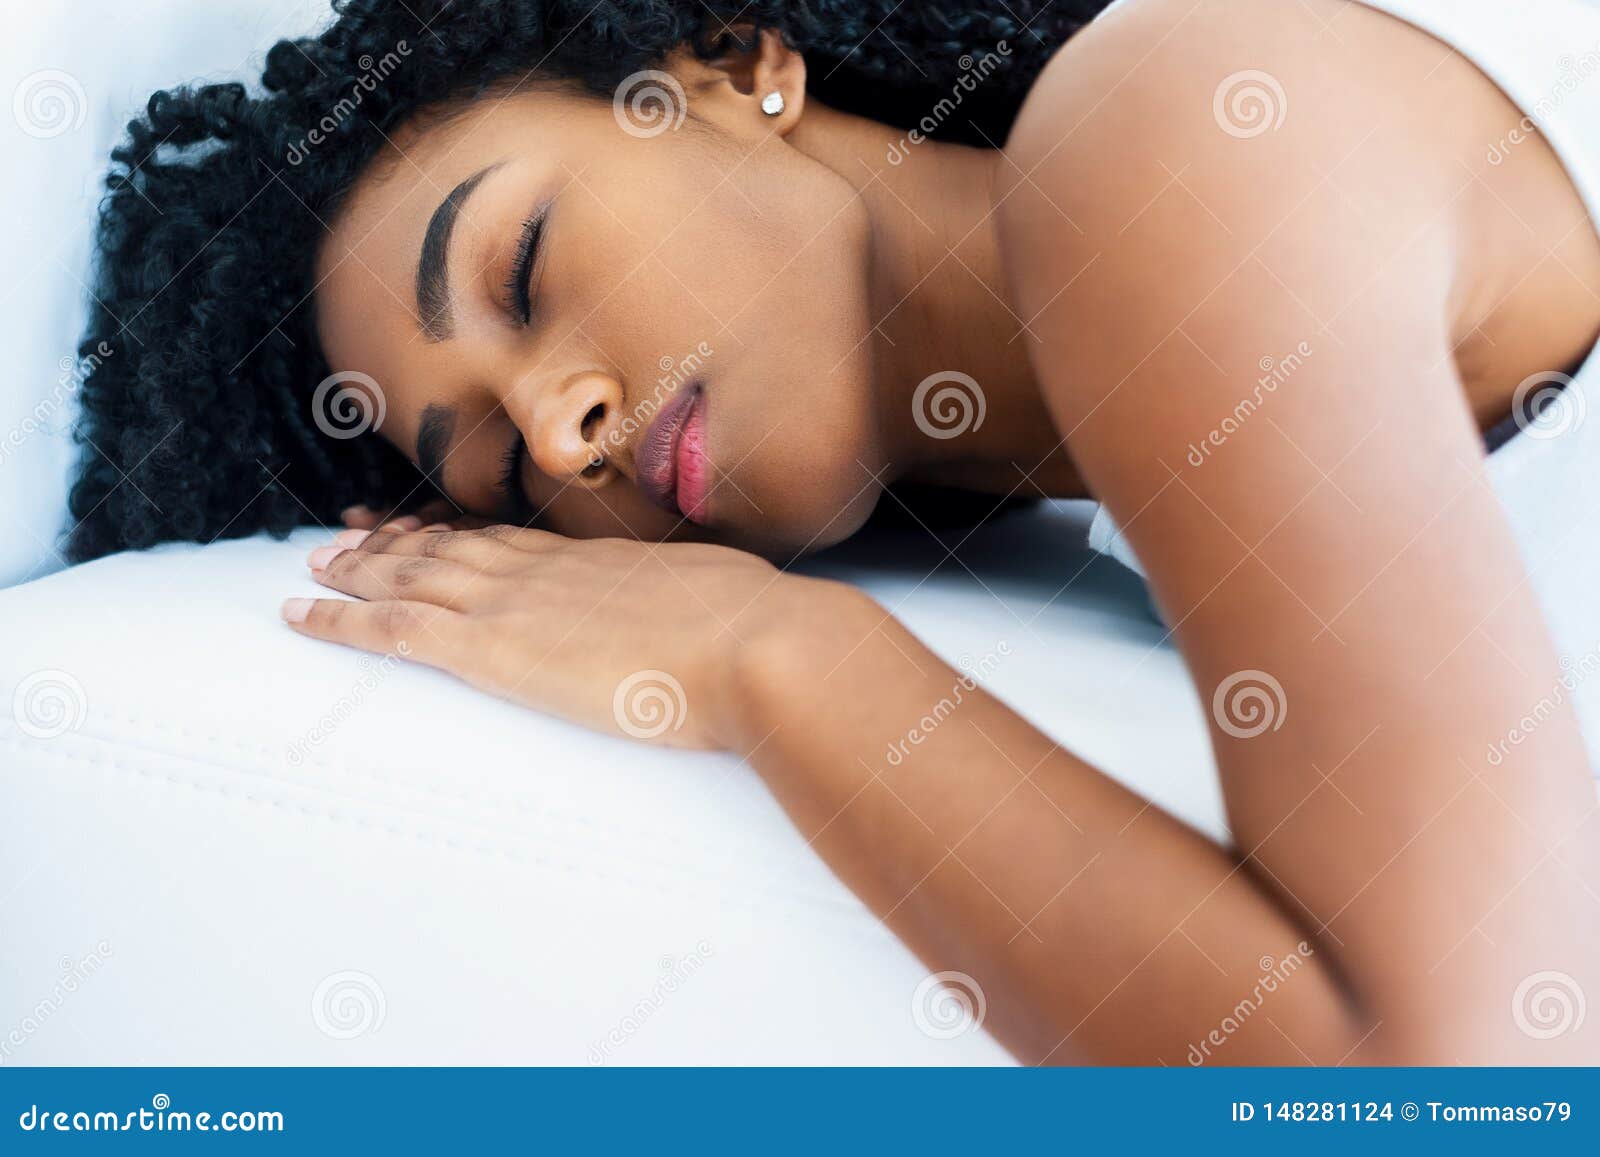 Very Young Black Teen Girls Sleeping